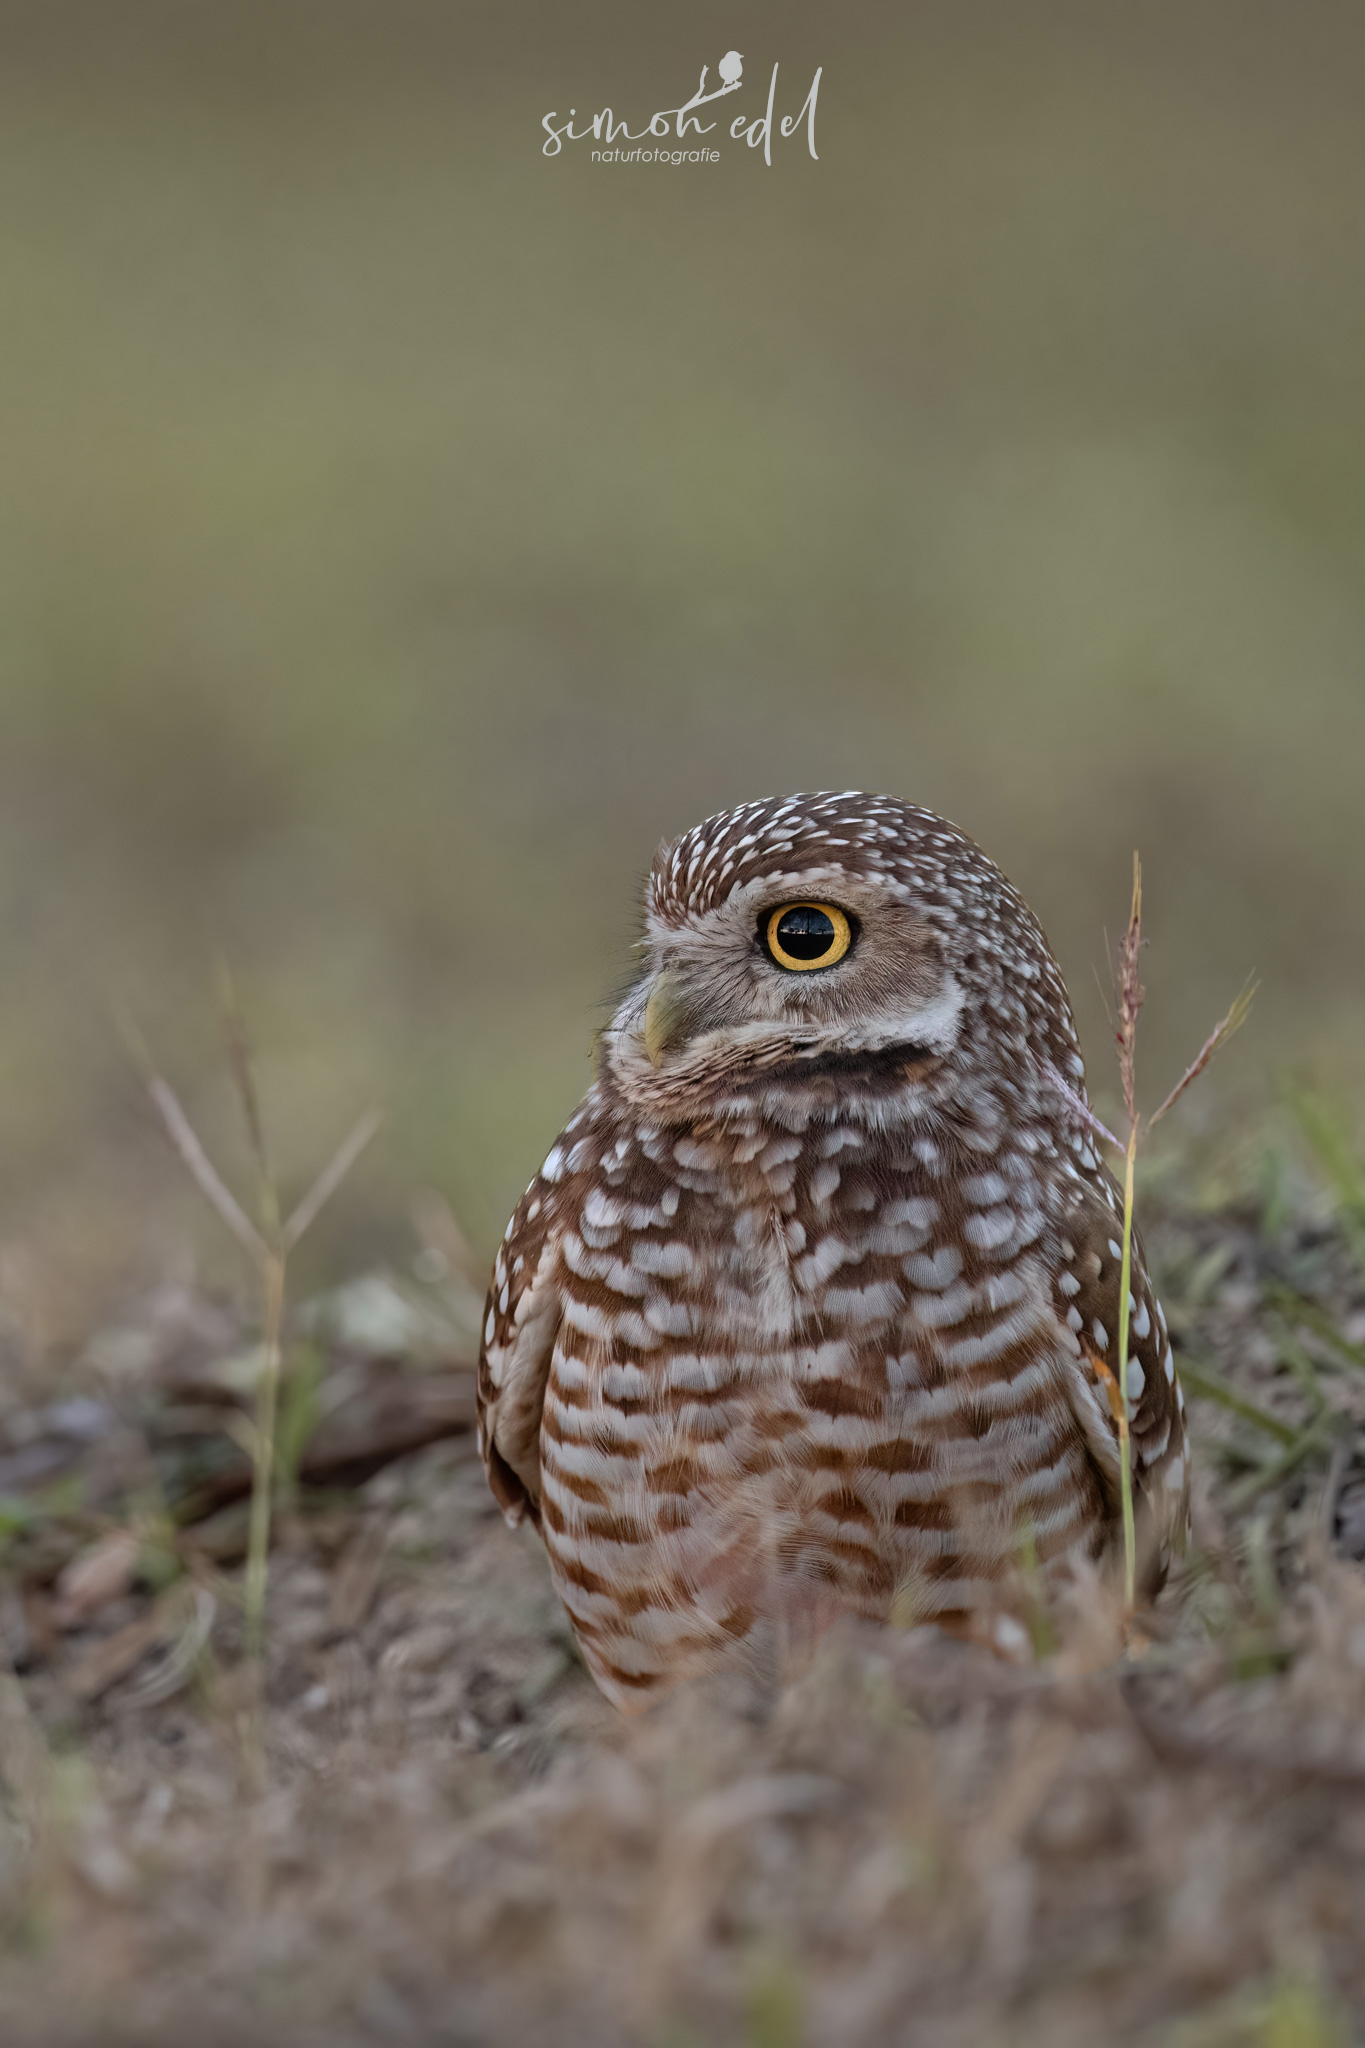 Kaninchenkauz (burrowing owl)